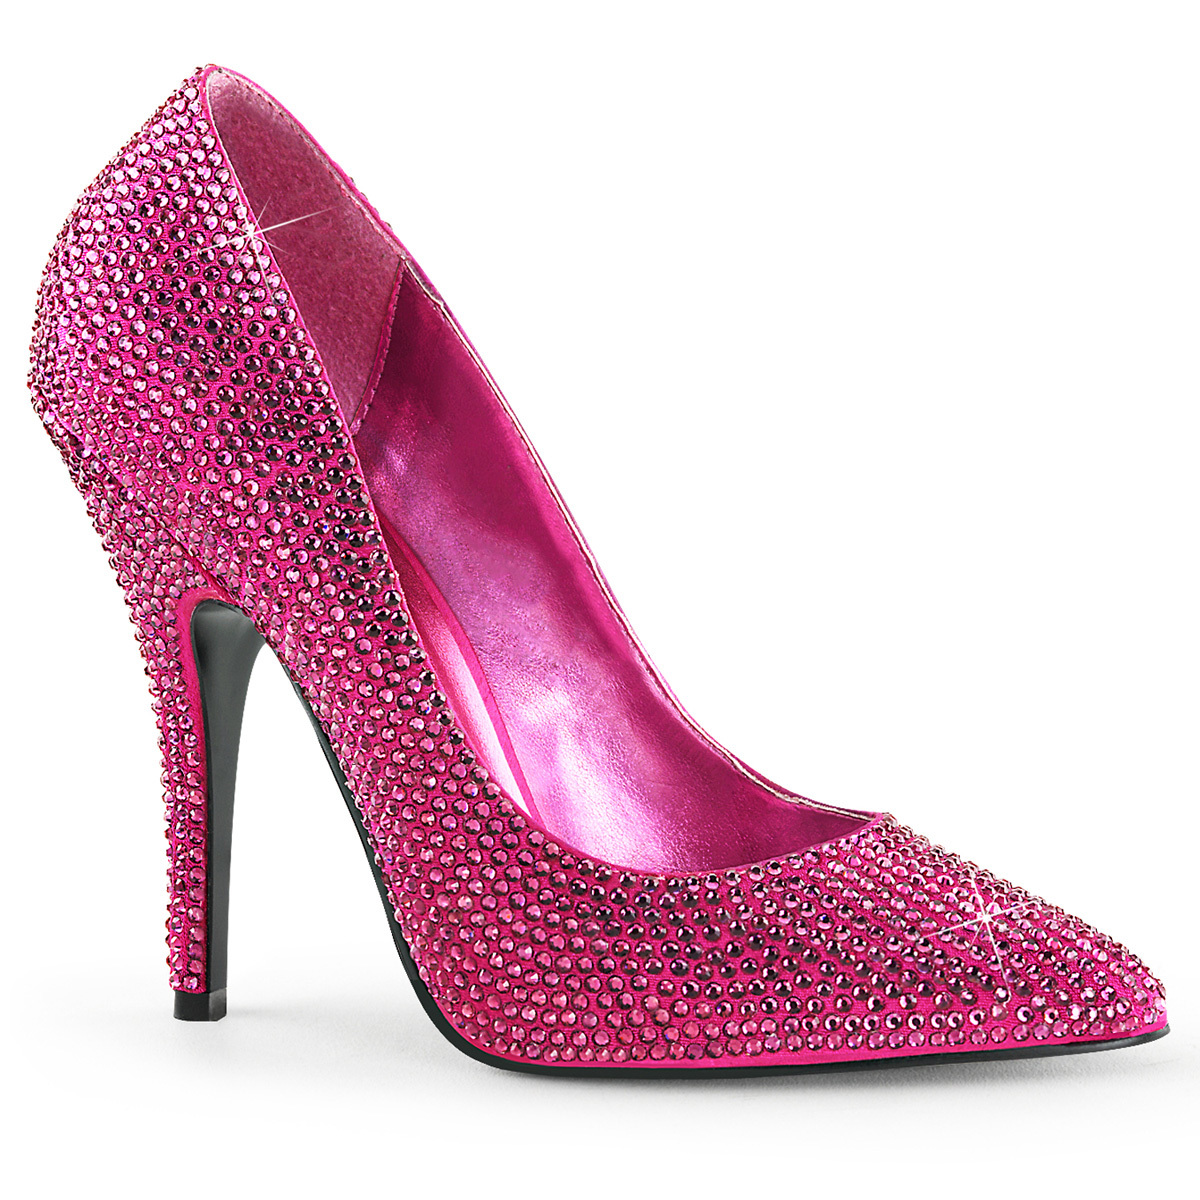 PLEASER Seduce-420RS Series 5in Heel Pumps - Hot Pink Satin - Women's Shoes